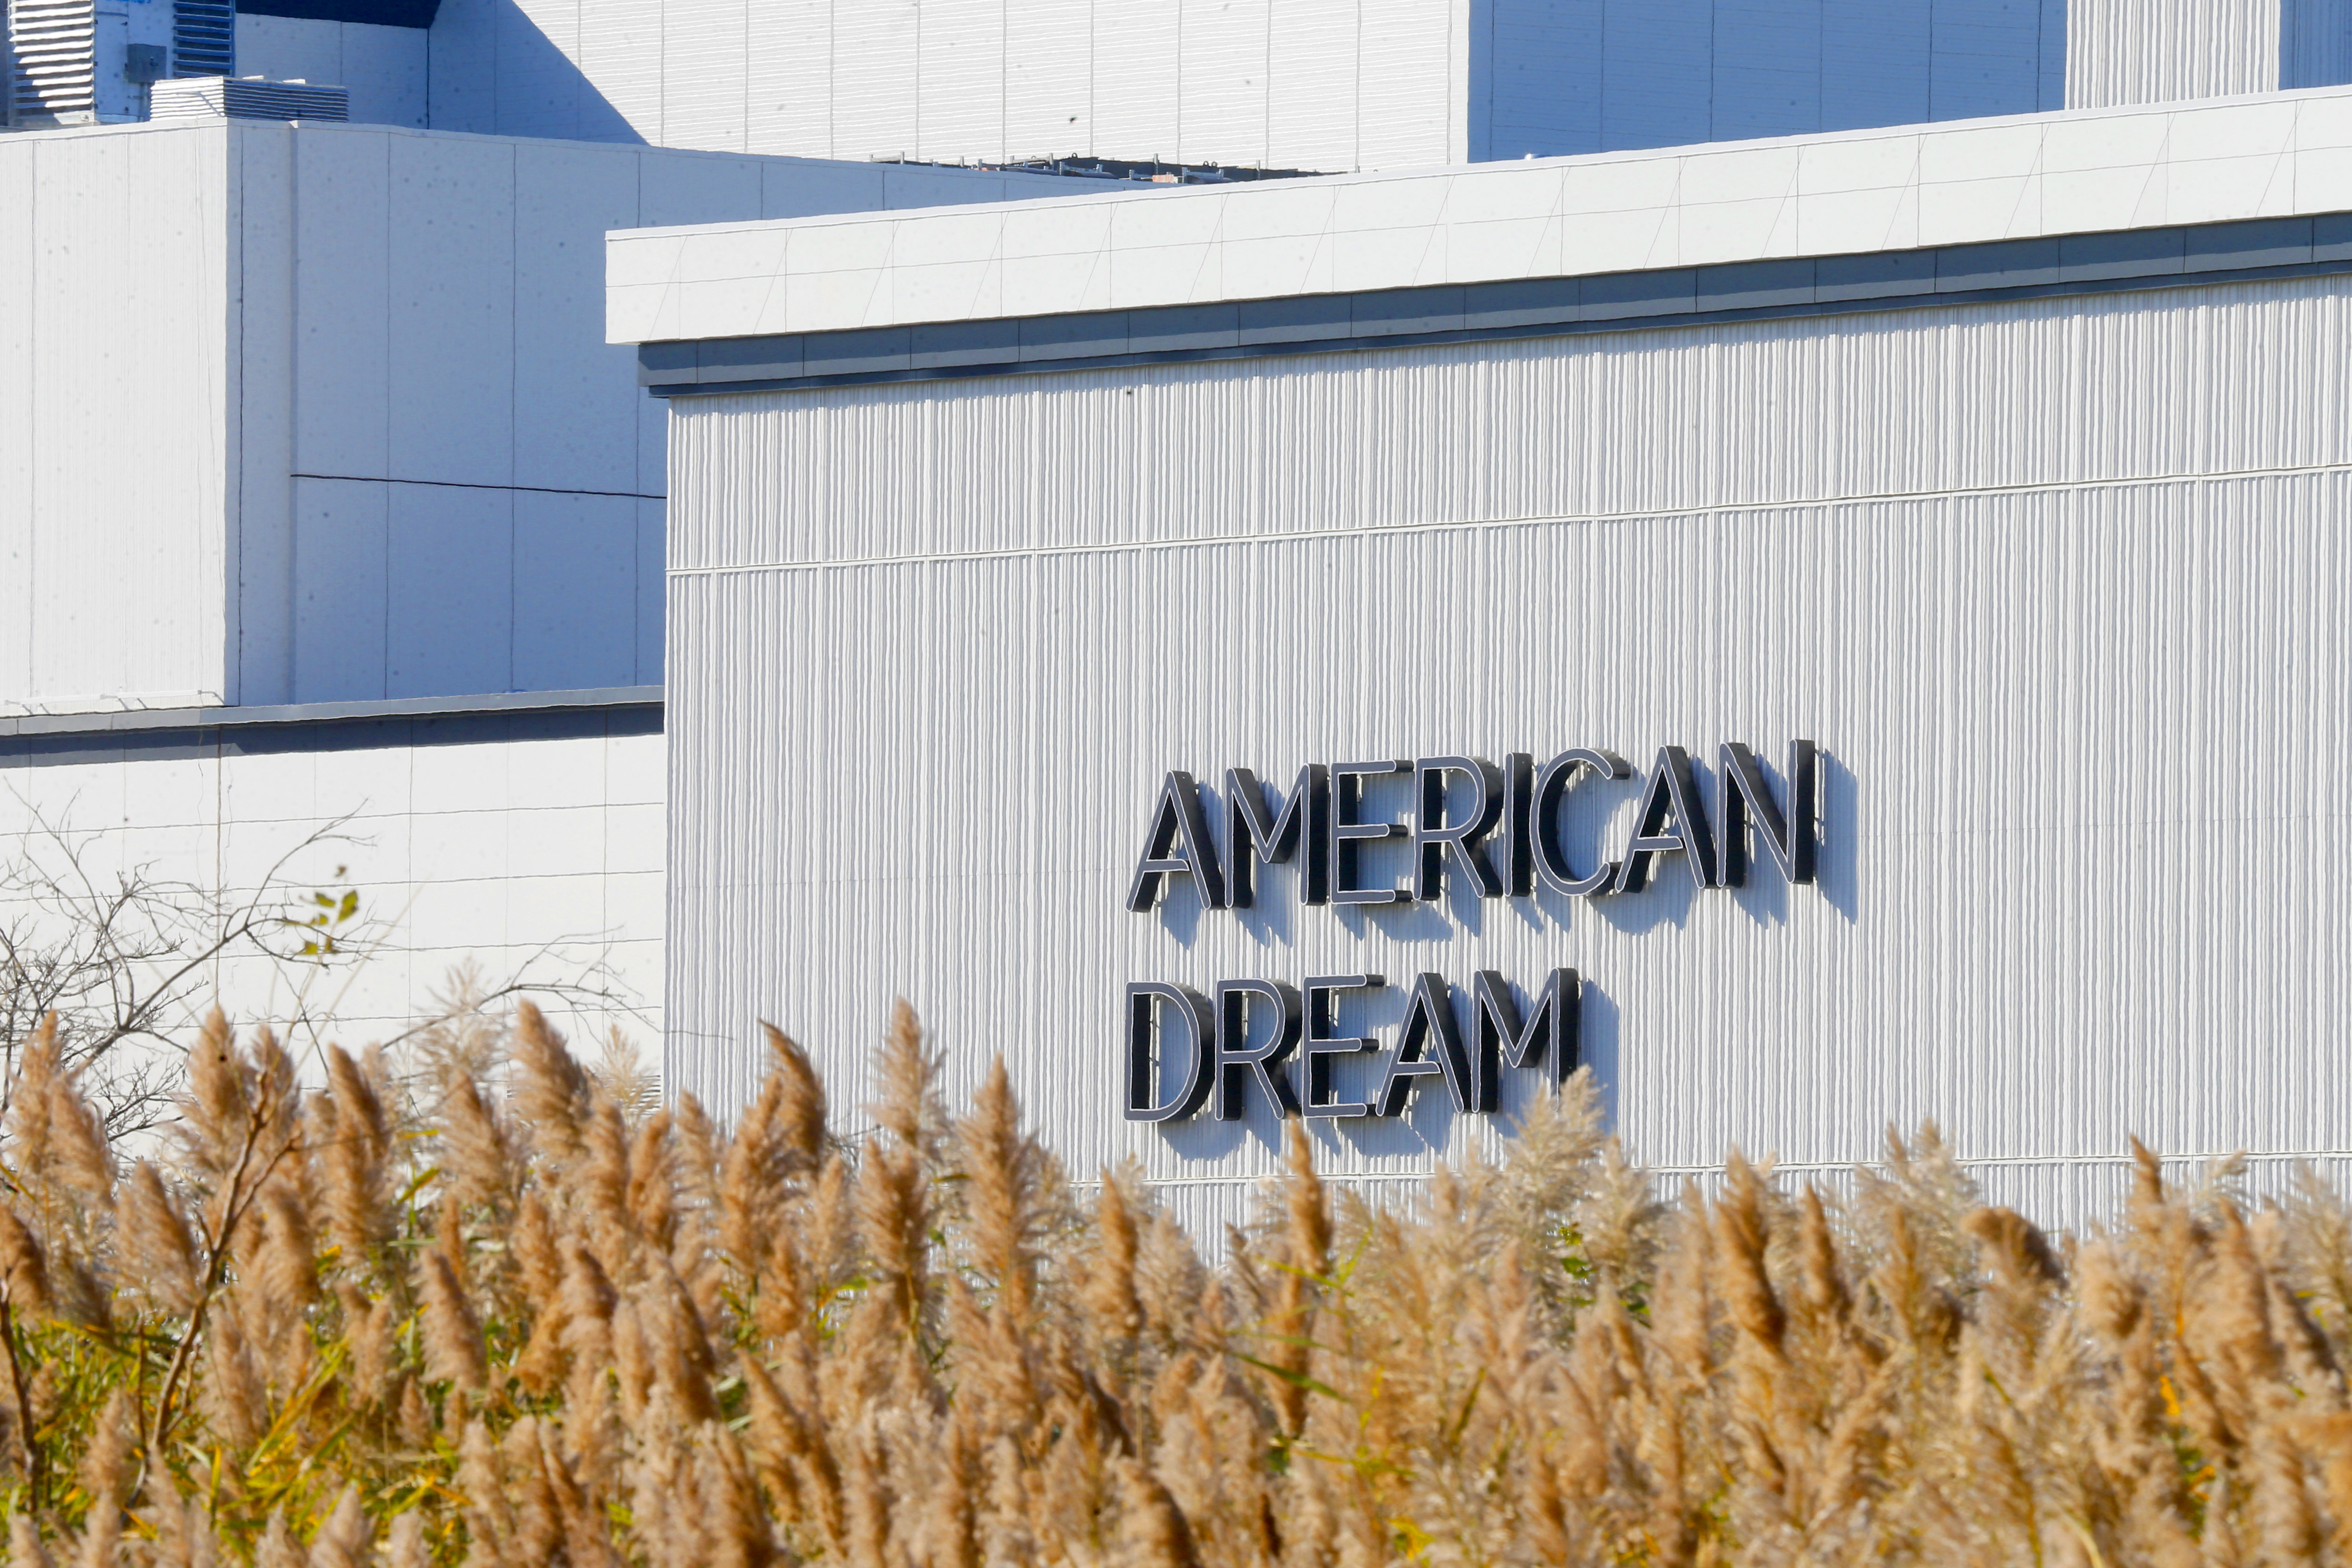 American Dream retailers are hiring